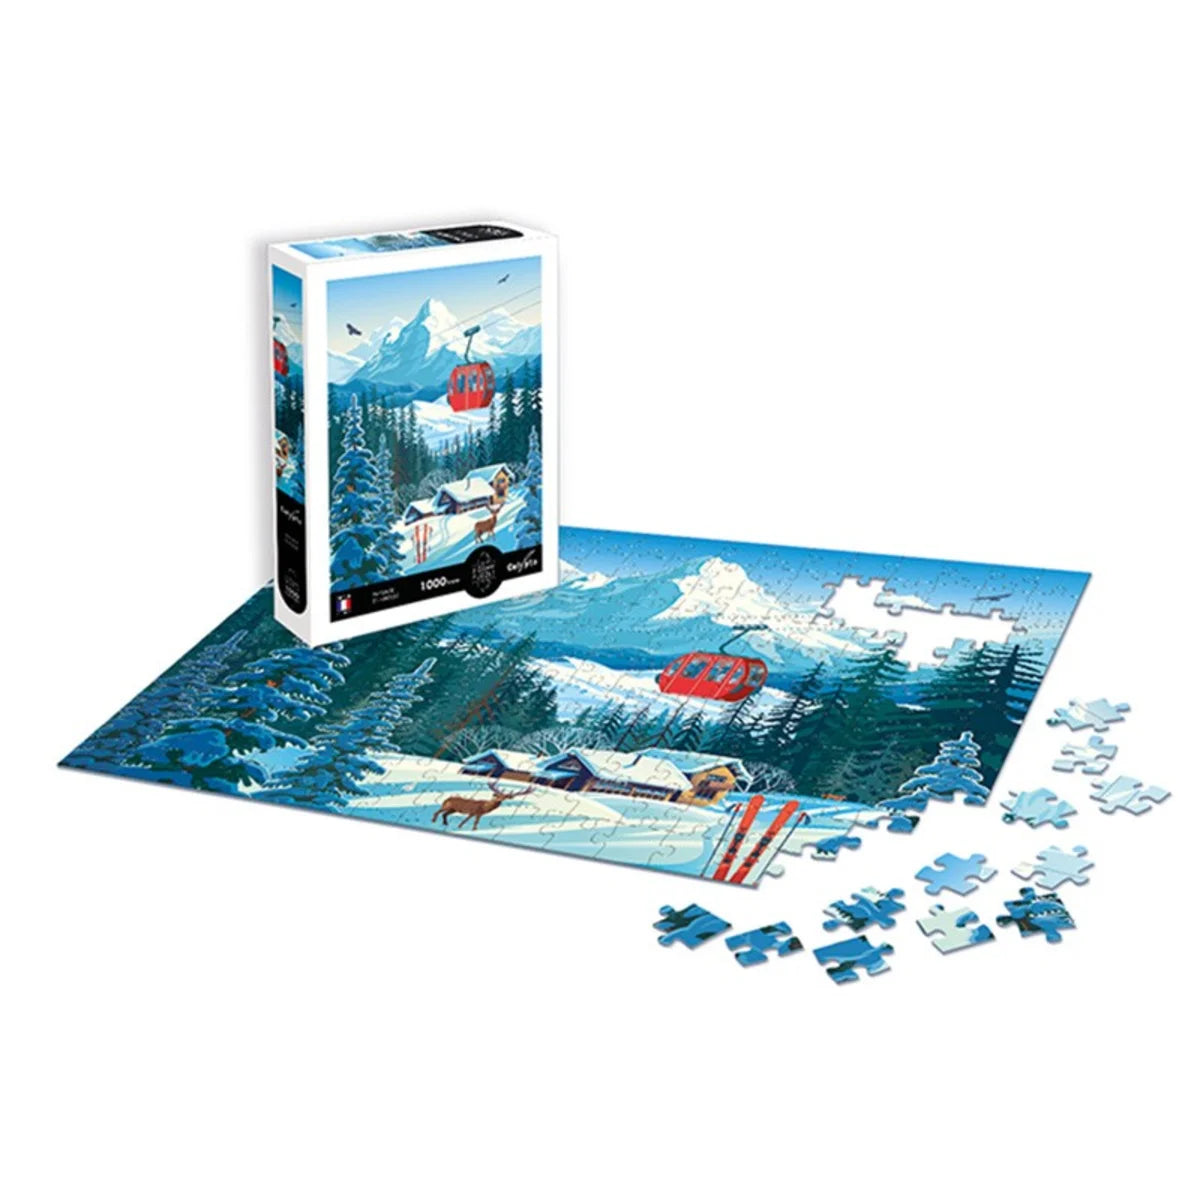 Puzzle Calypto - 1000 pieces - Paysage enneige